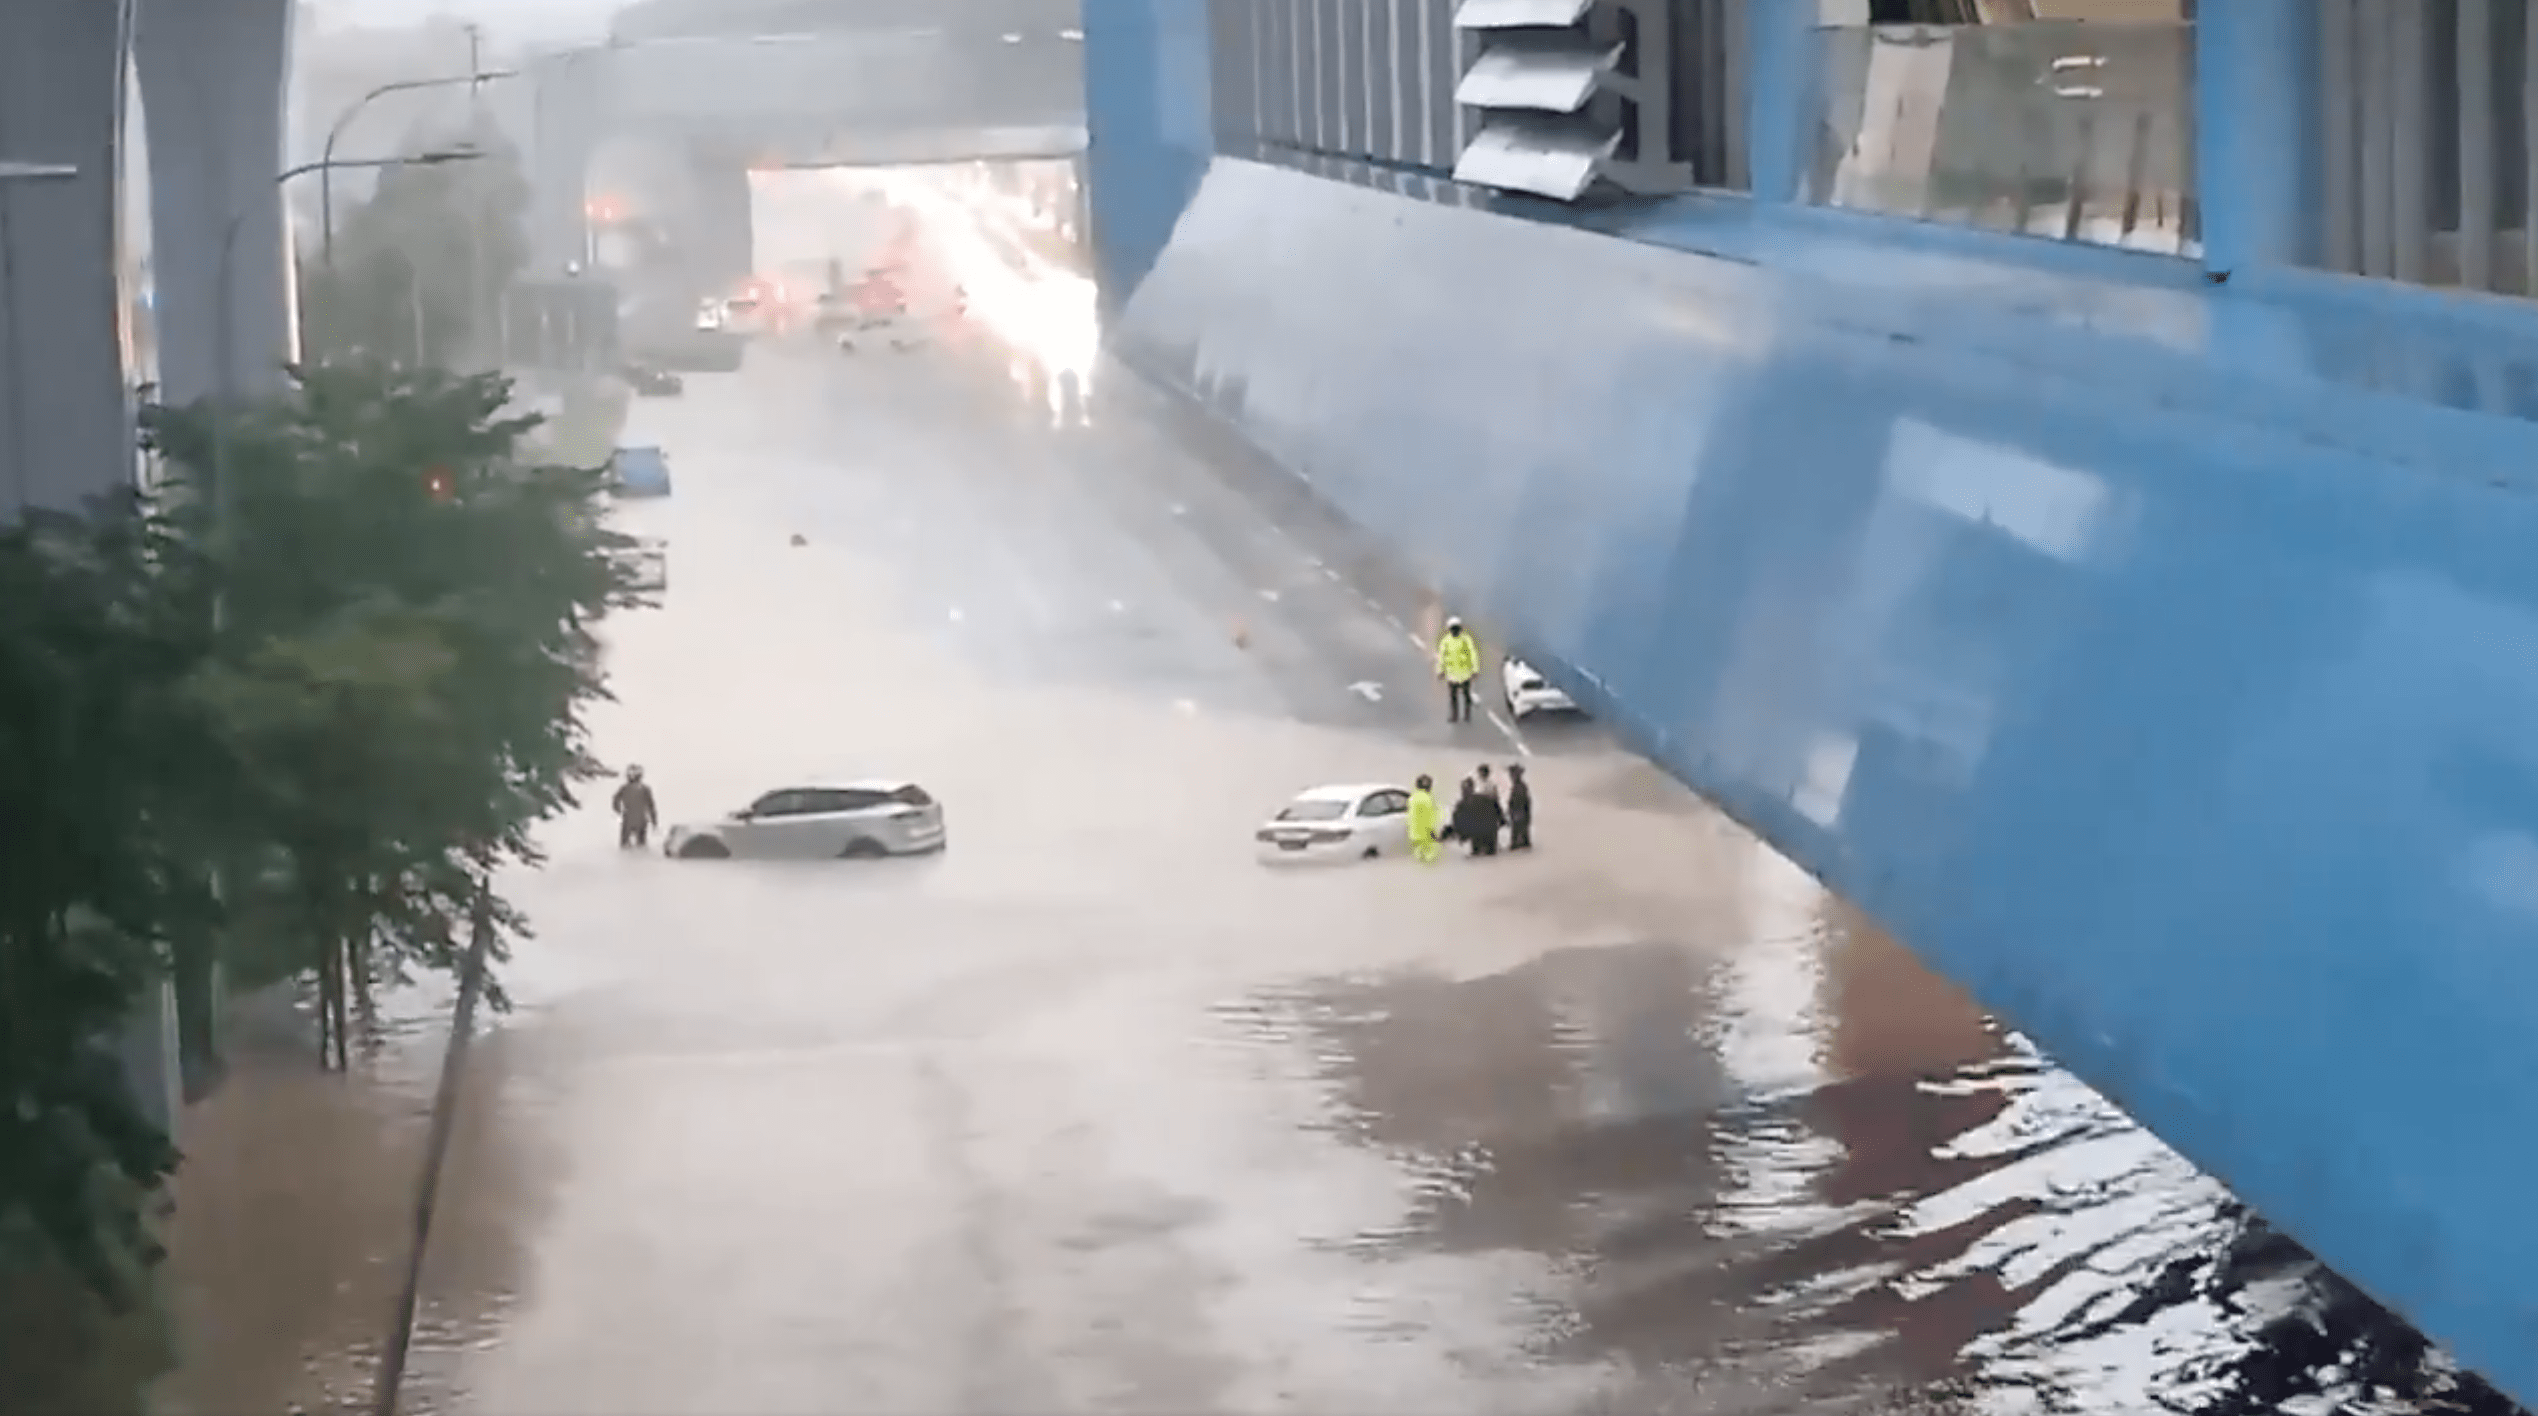 Rain causes flash floods in KL - flood